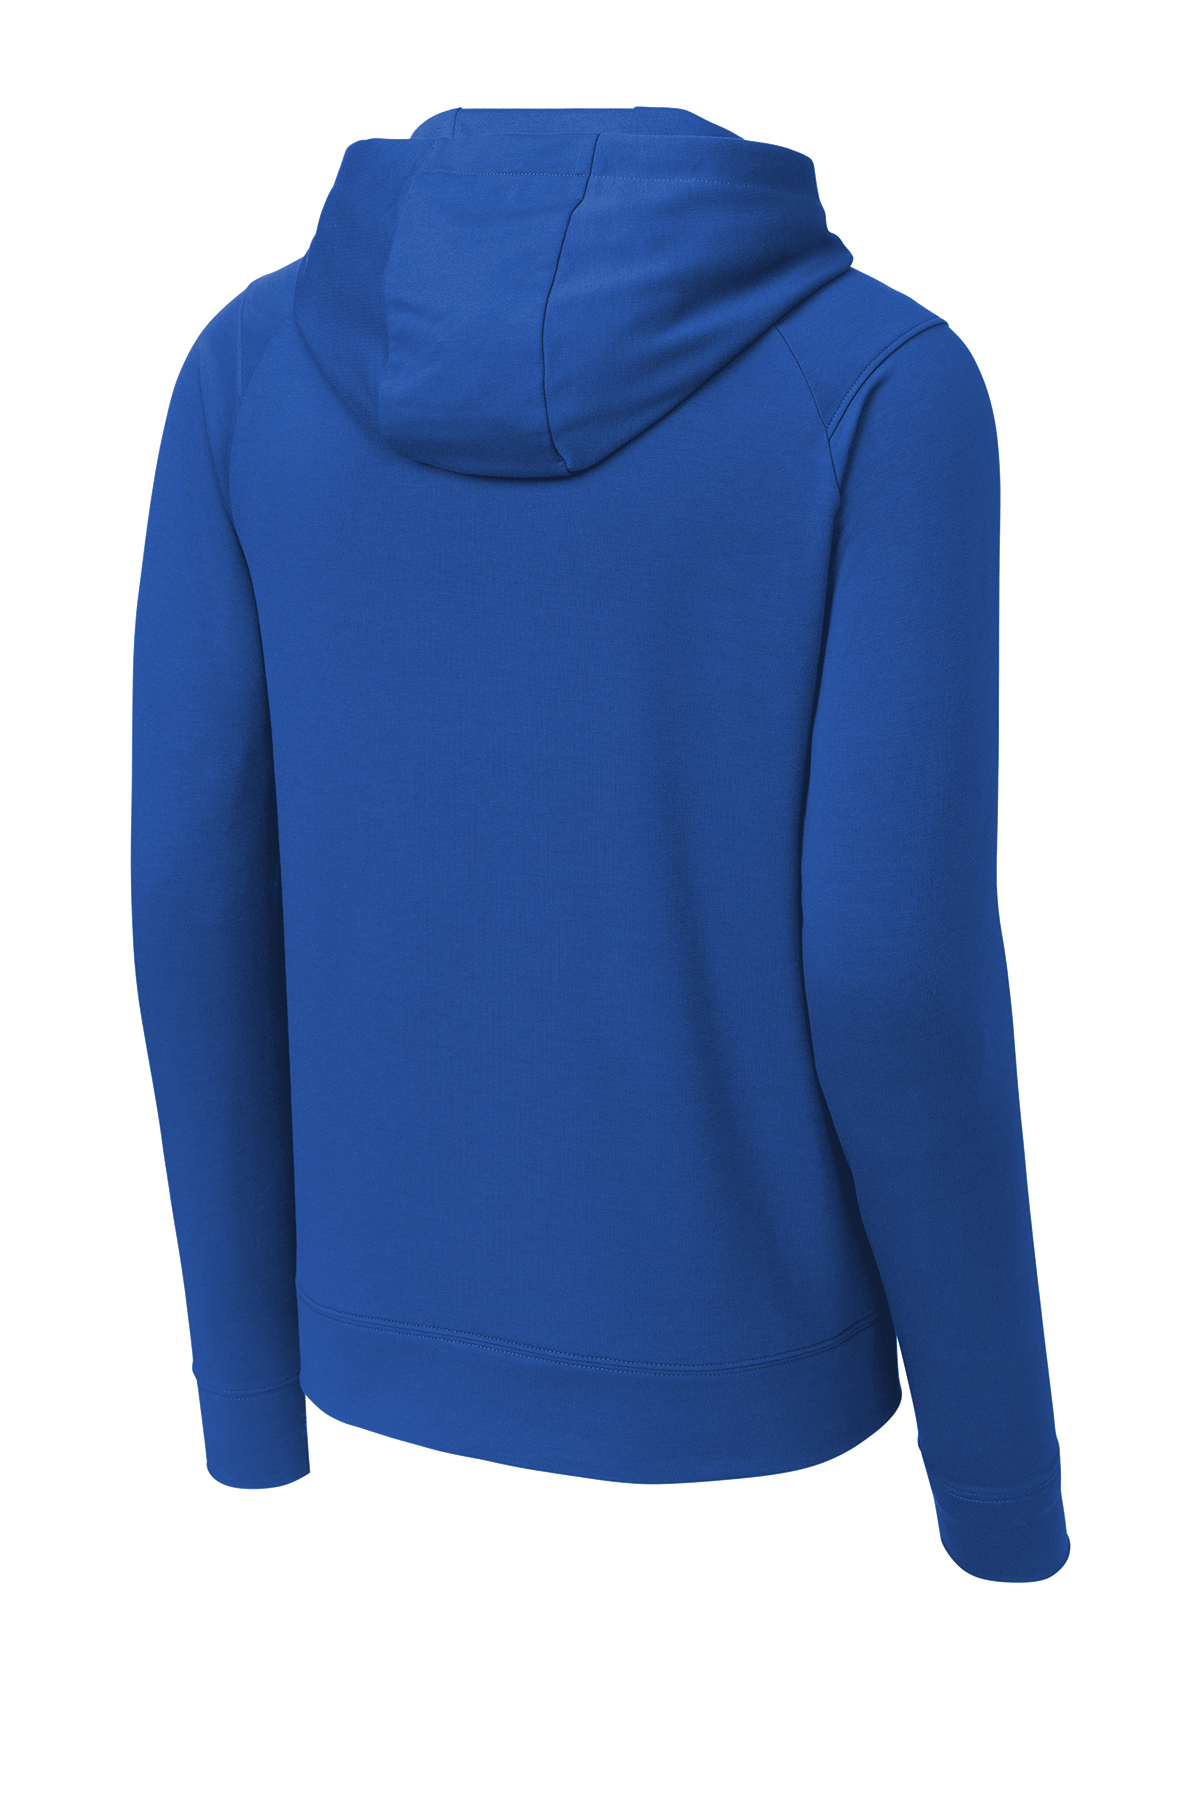 Sport-Tek Sport-Wick Flex Fleece Pullover Hoodie | Product | Company ...